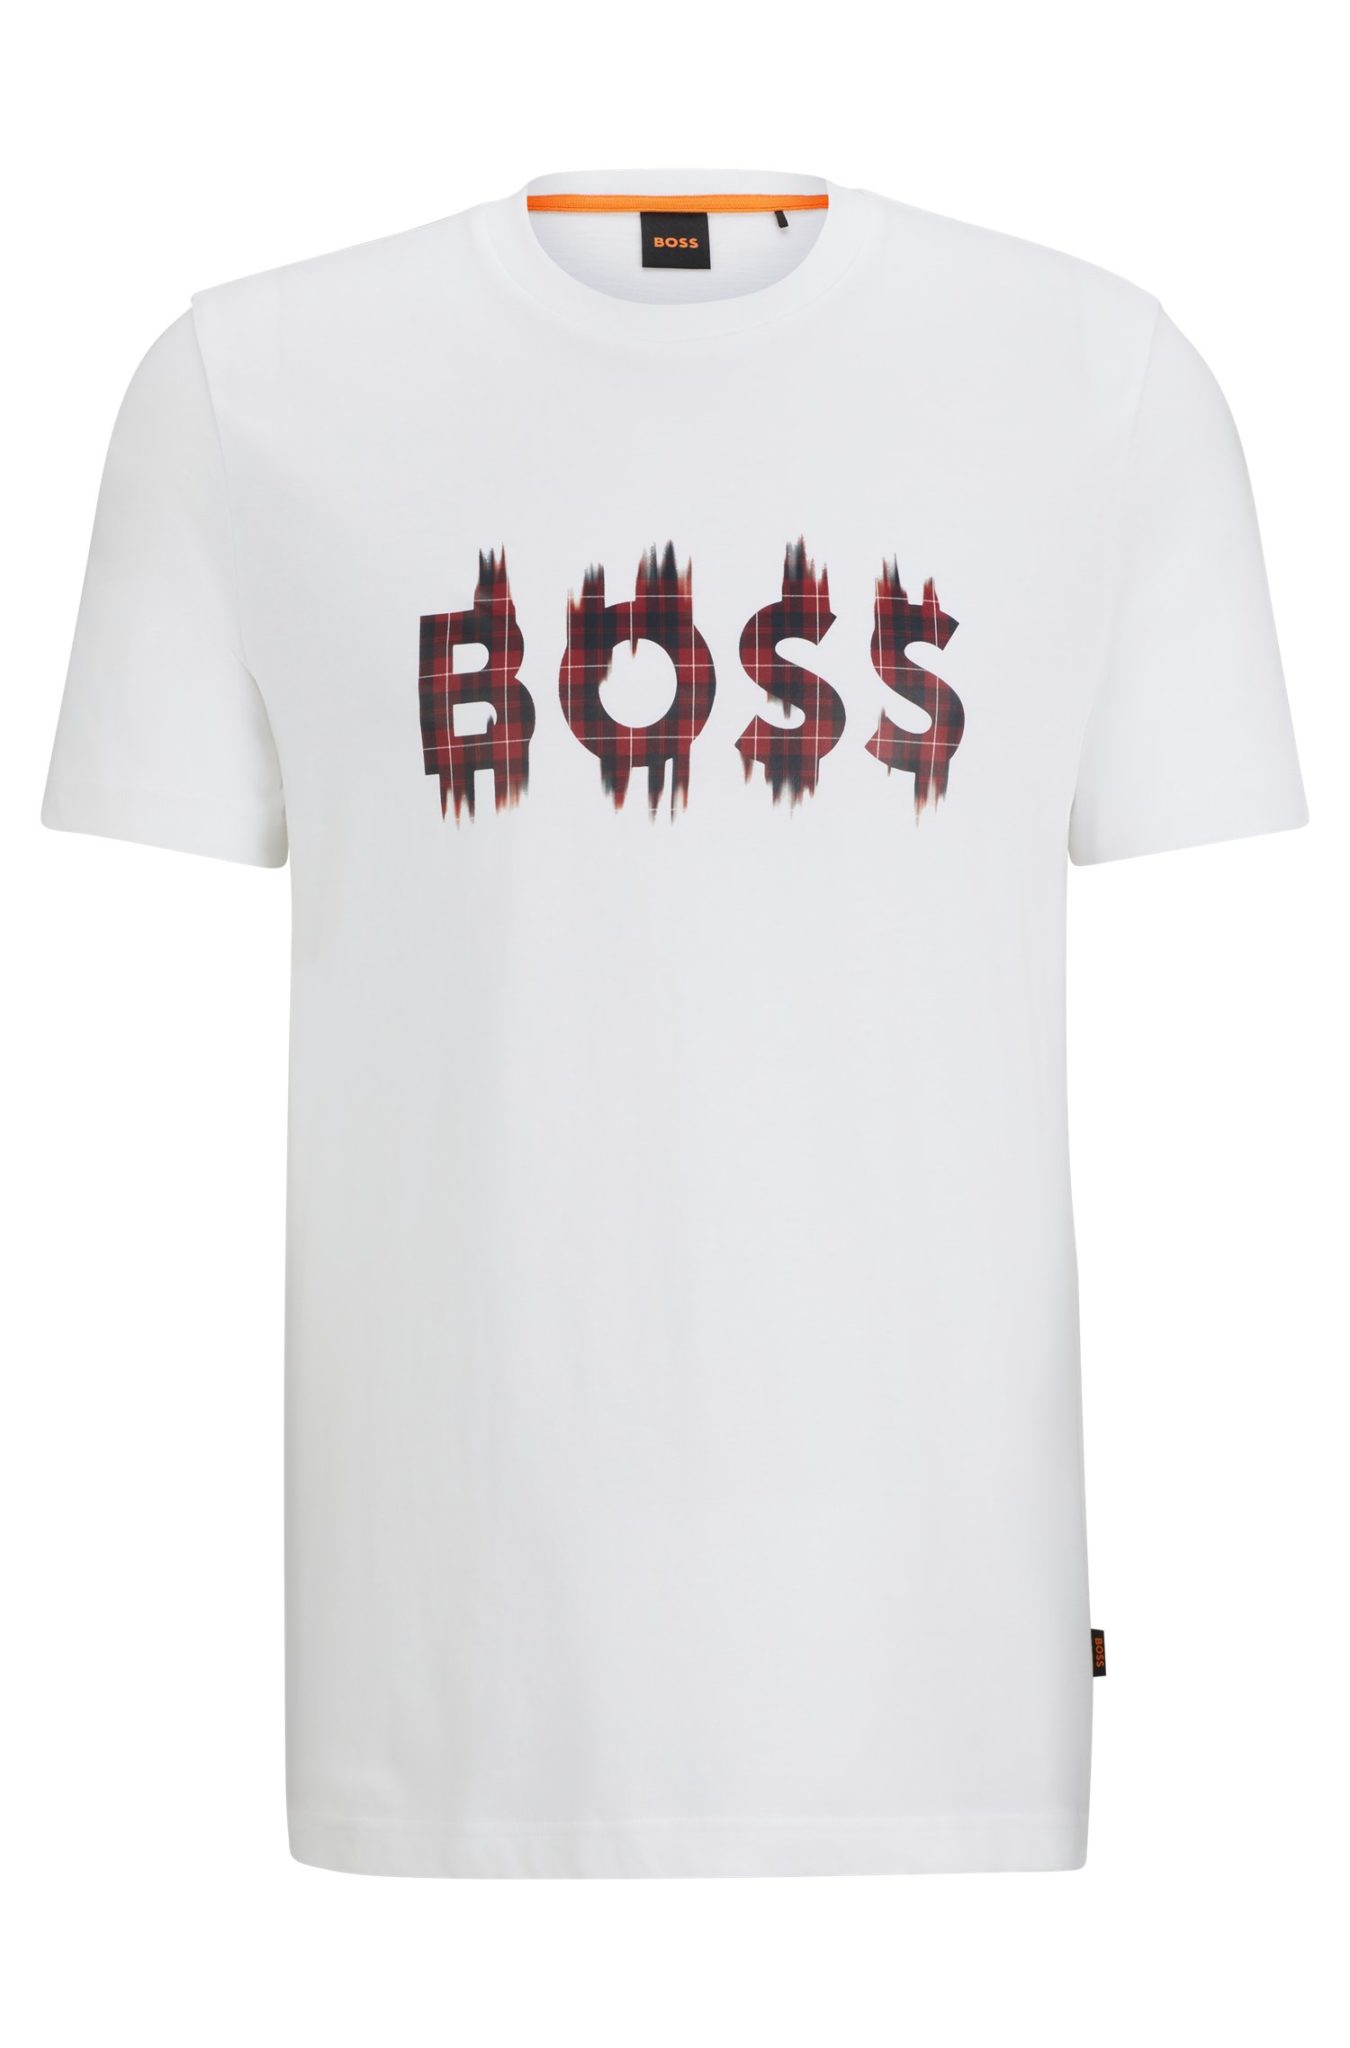 Hugo Boss T-shirt Regular Fit en jersey de coton avec motif artistique saisonnier